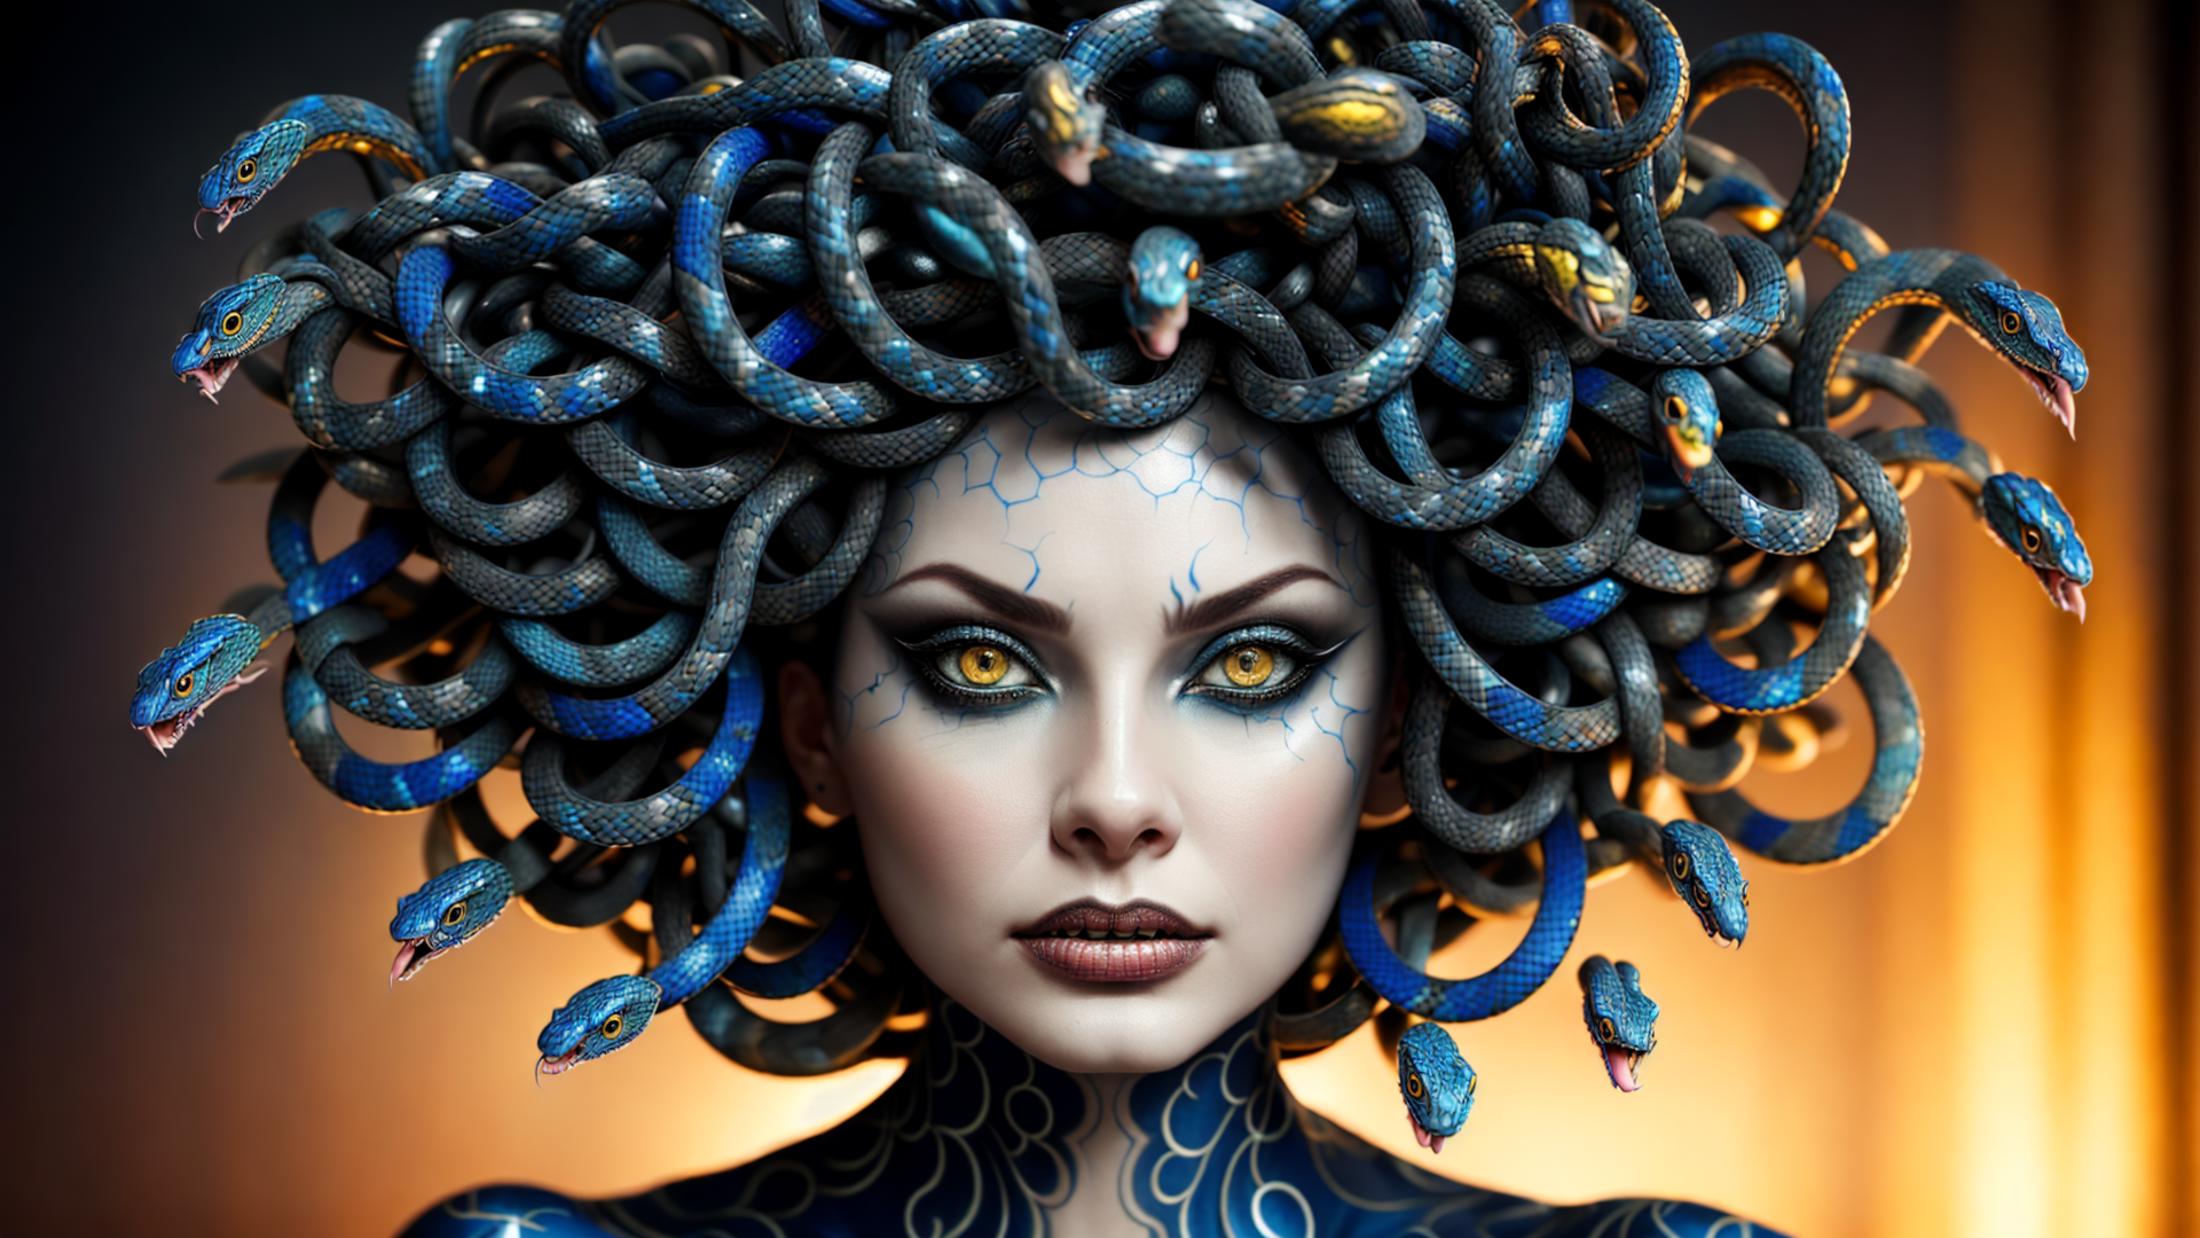 Mythology_Medusa image by rklaffehn